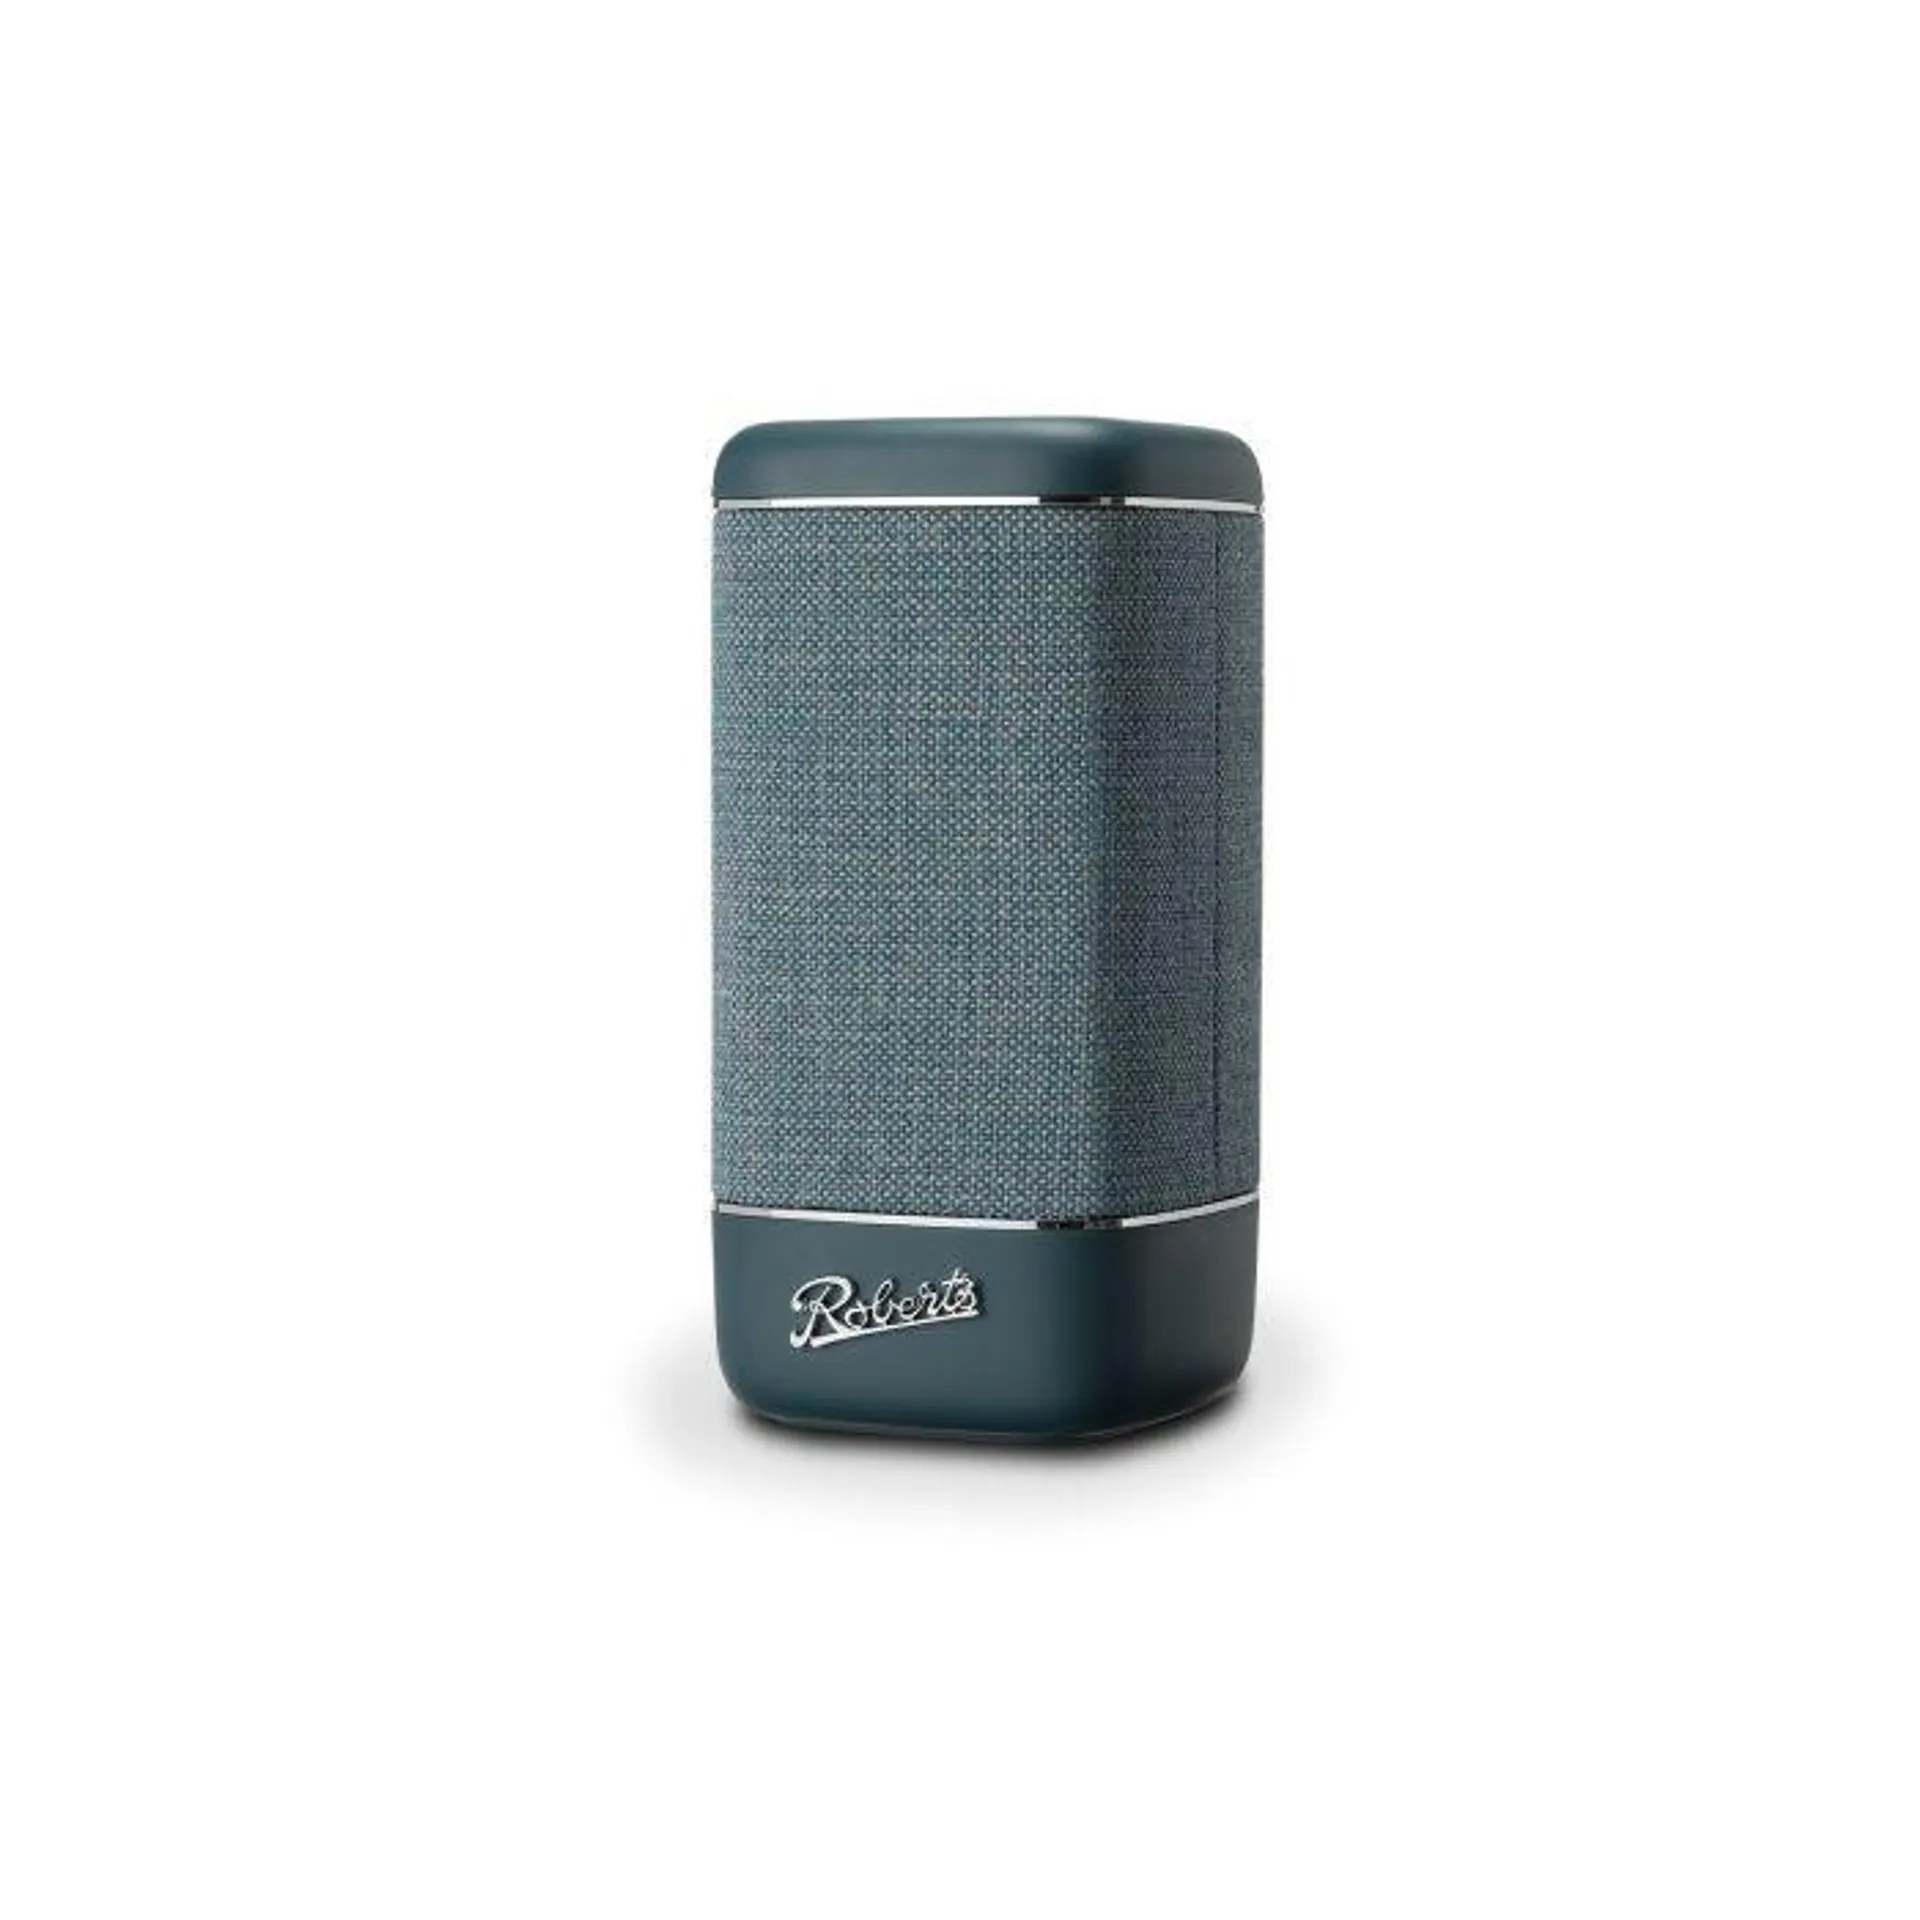 Roberts 320TB, Beacon 320, Portable Bluetooth Speaker, Teal Blue